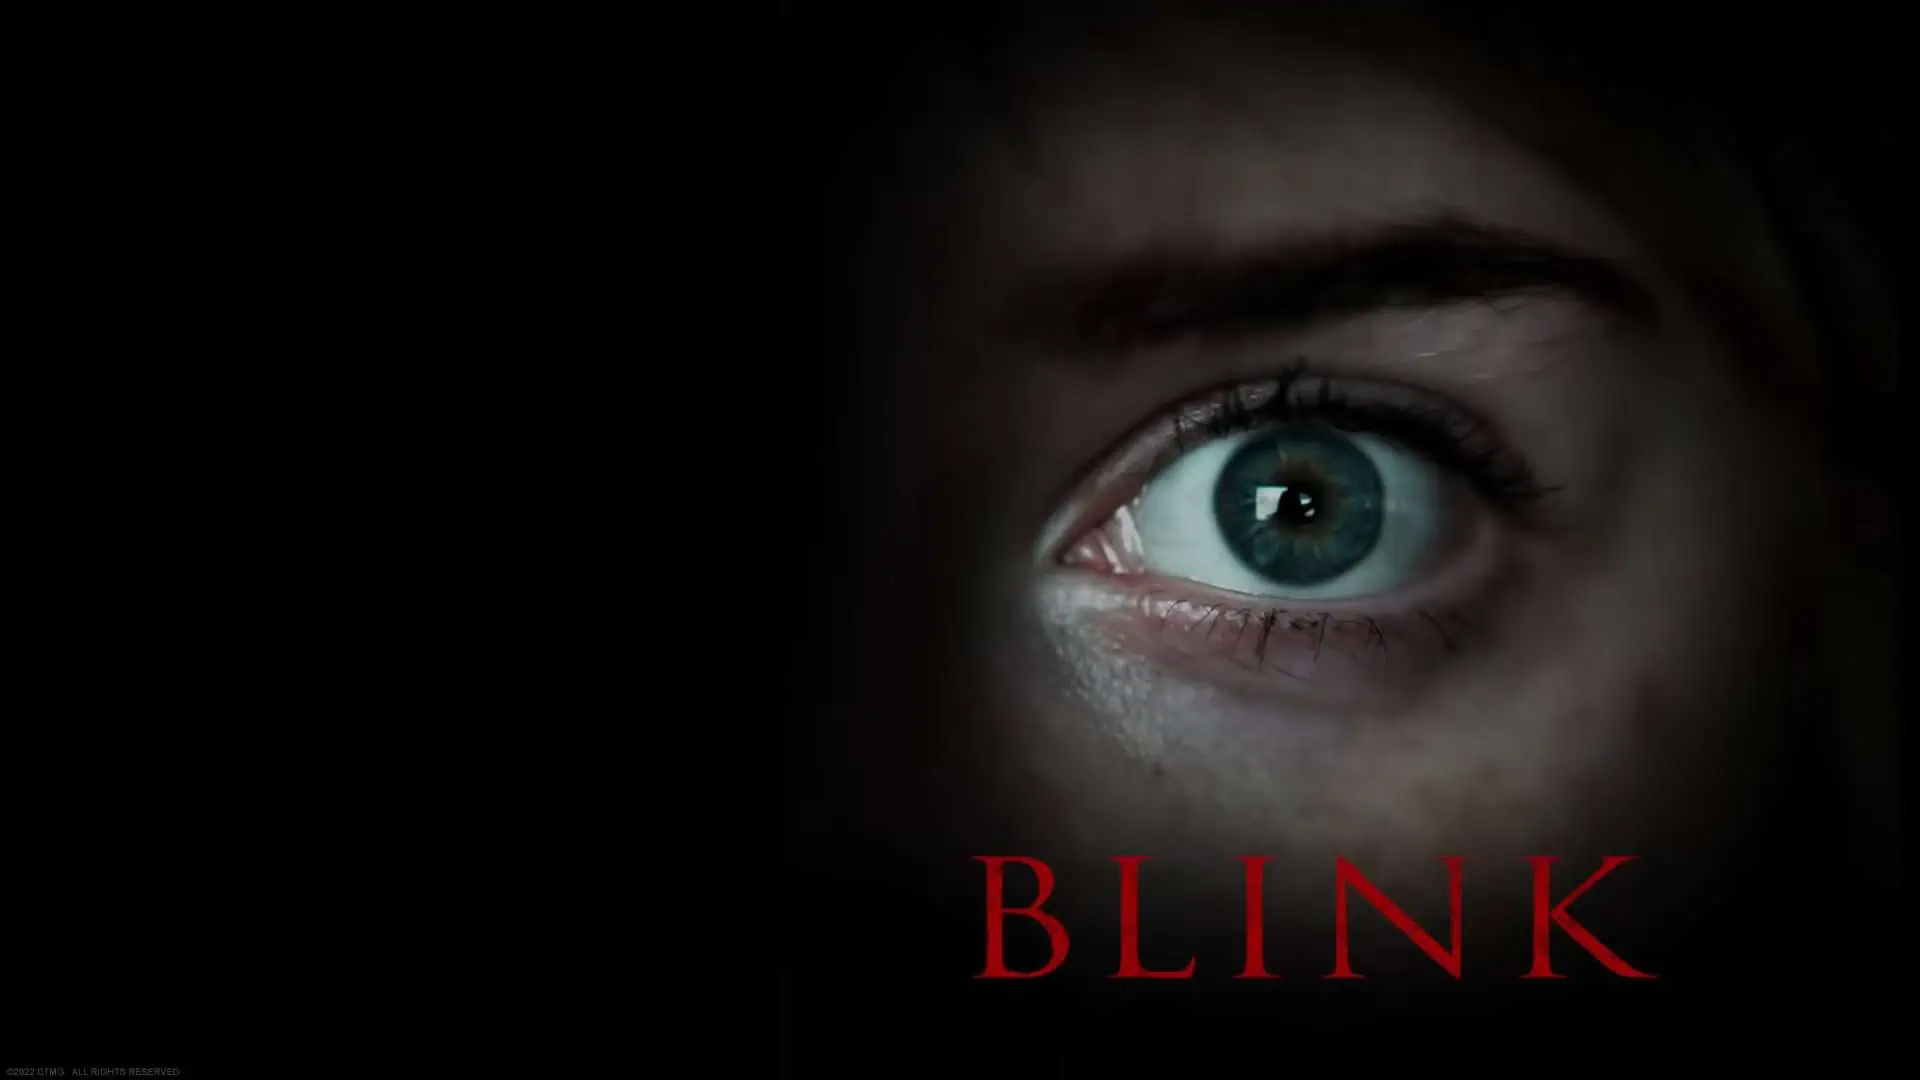 Blink's title card featuring an eye